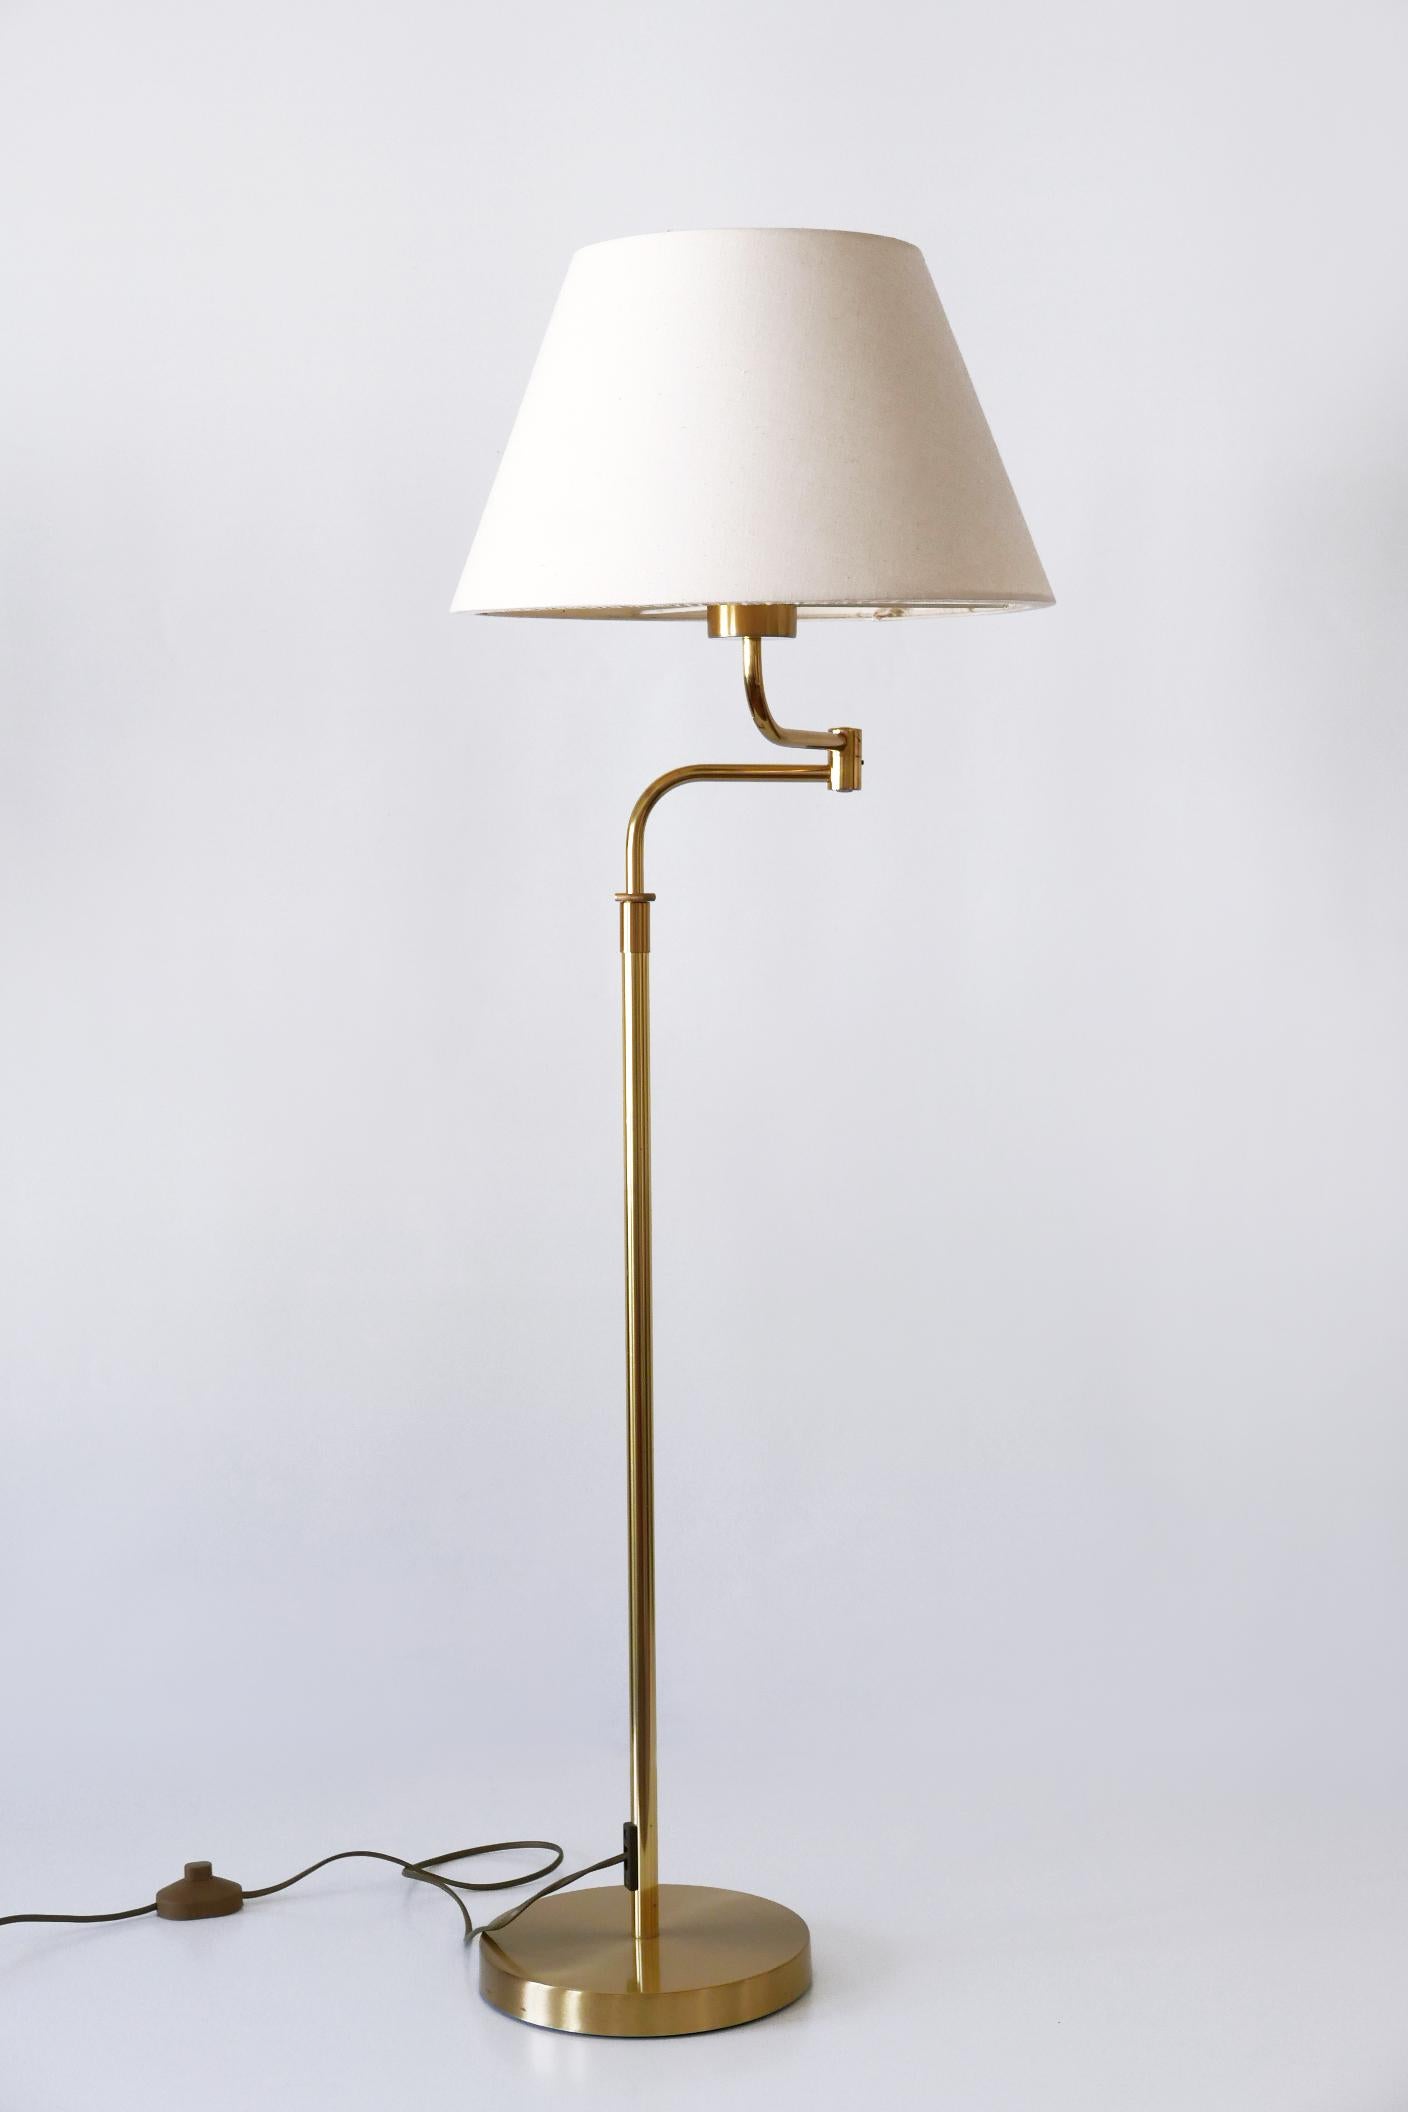 Fabric Adjustable Vintage Floor Lamp or Reading Light by Sölken Leuchten Germany 1980s For Sale